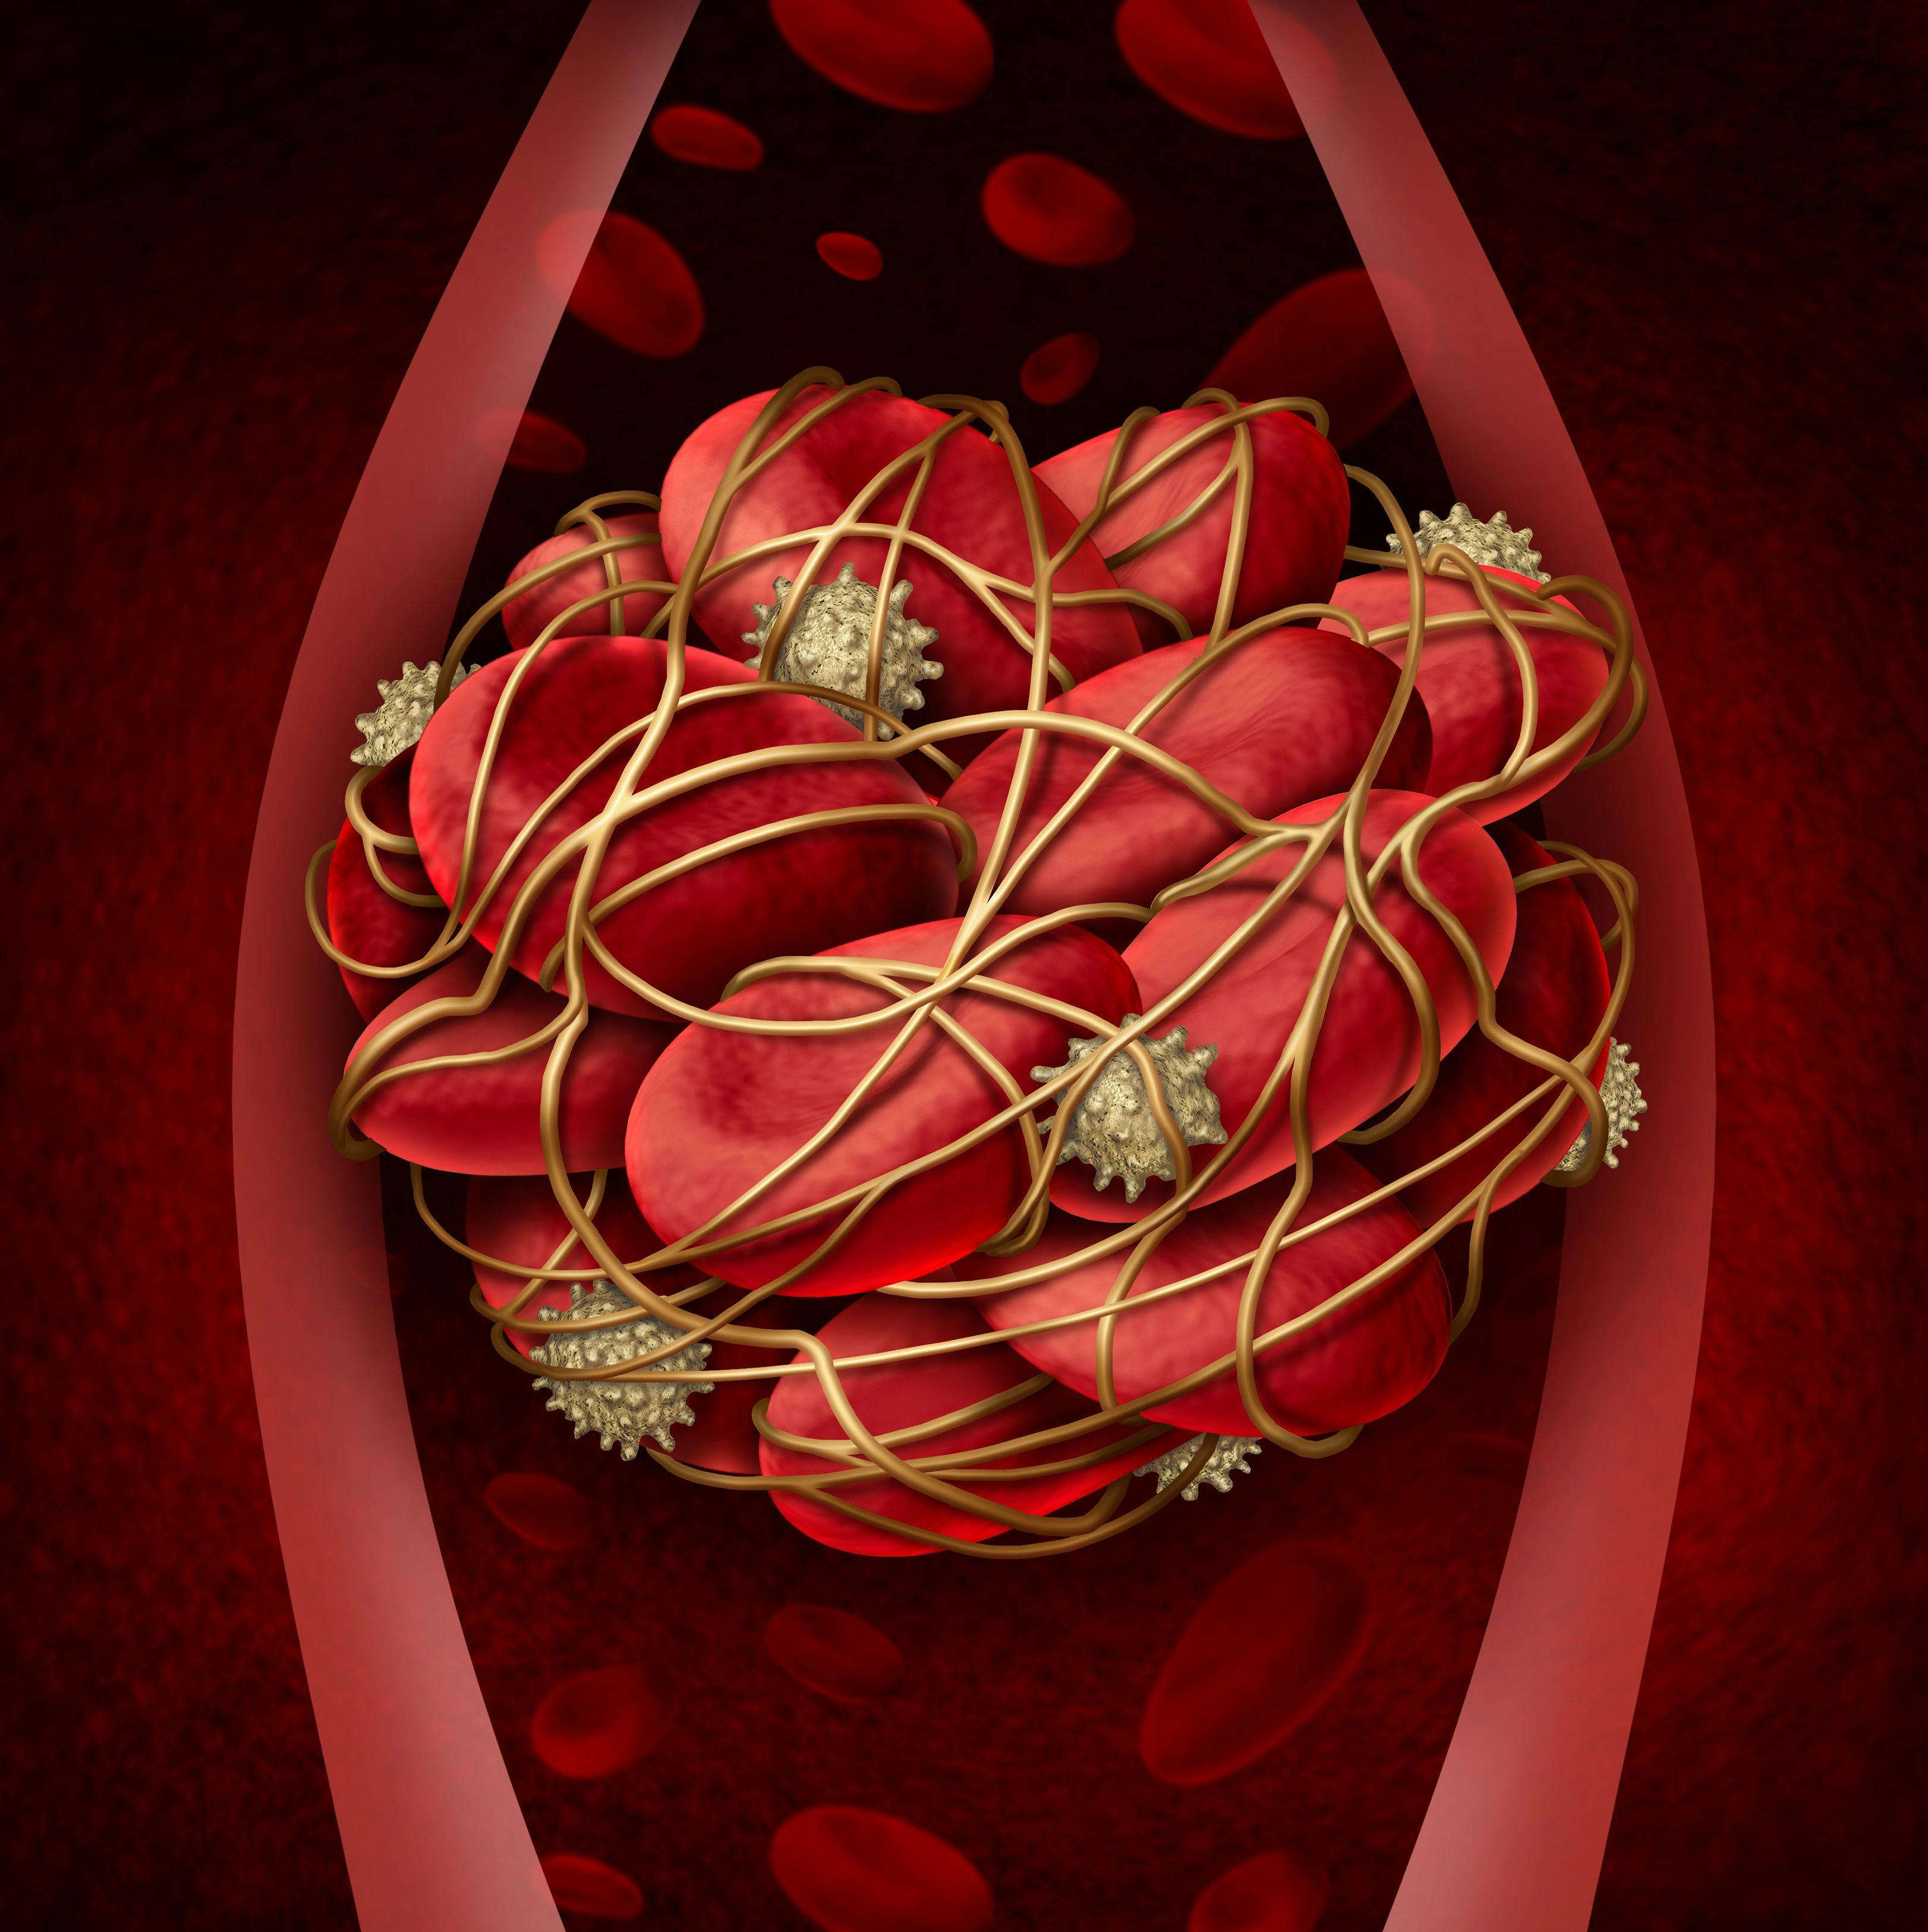 COVID-19 and Atrial Arrhythmias May Increase Risk of Major Adverse Cardiac Events, Death